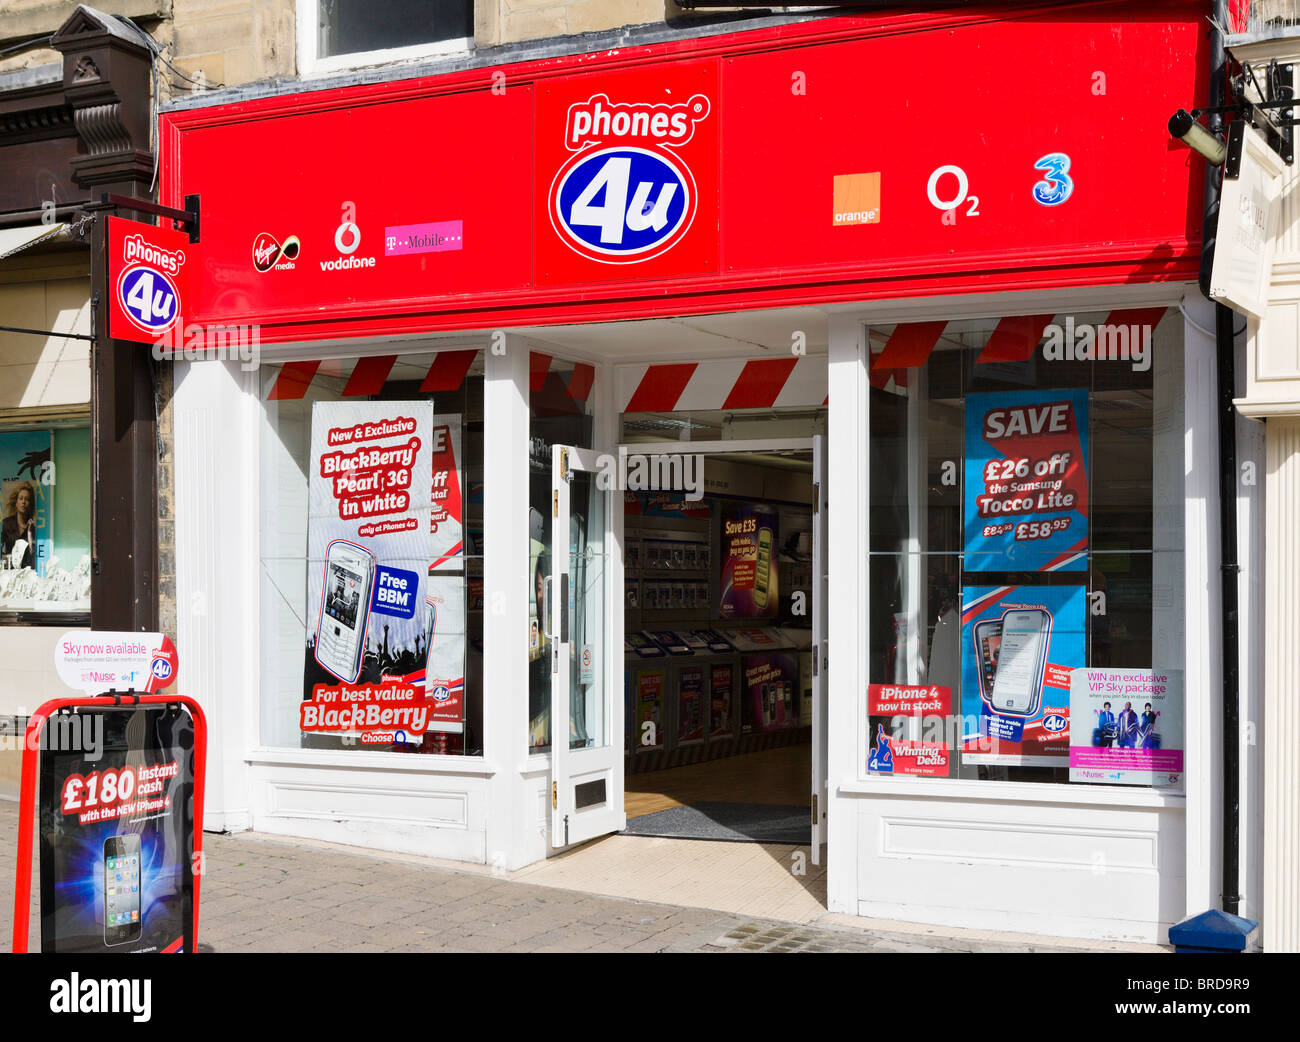 Phones 4U Shop in Huddersfield Town Centre, West Yorkshire, England, UK Stockfoto